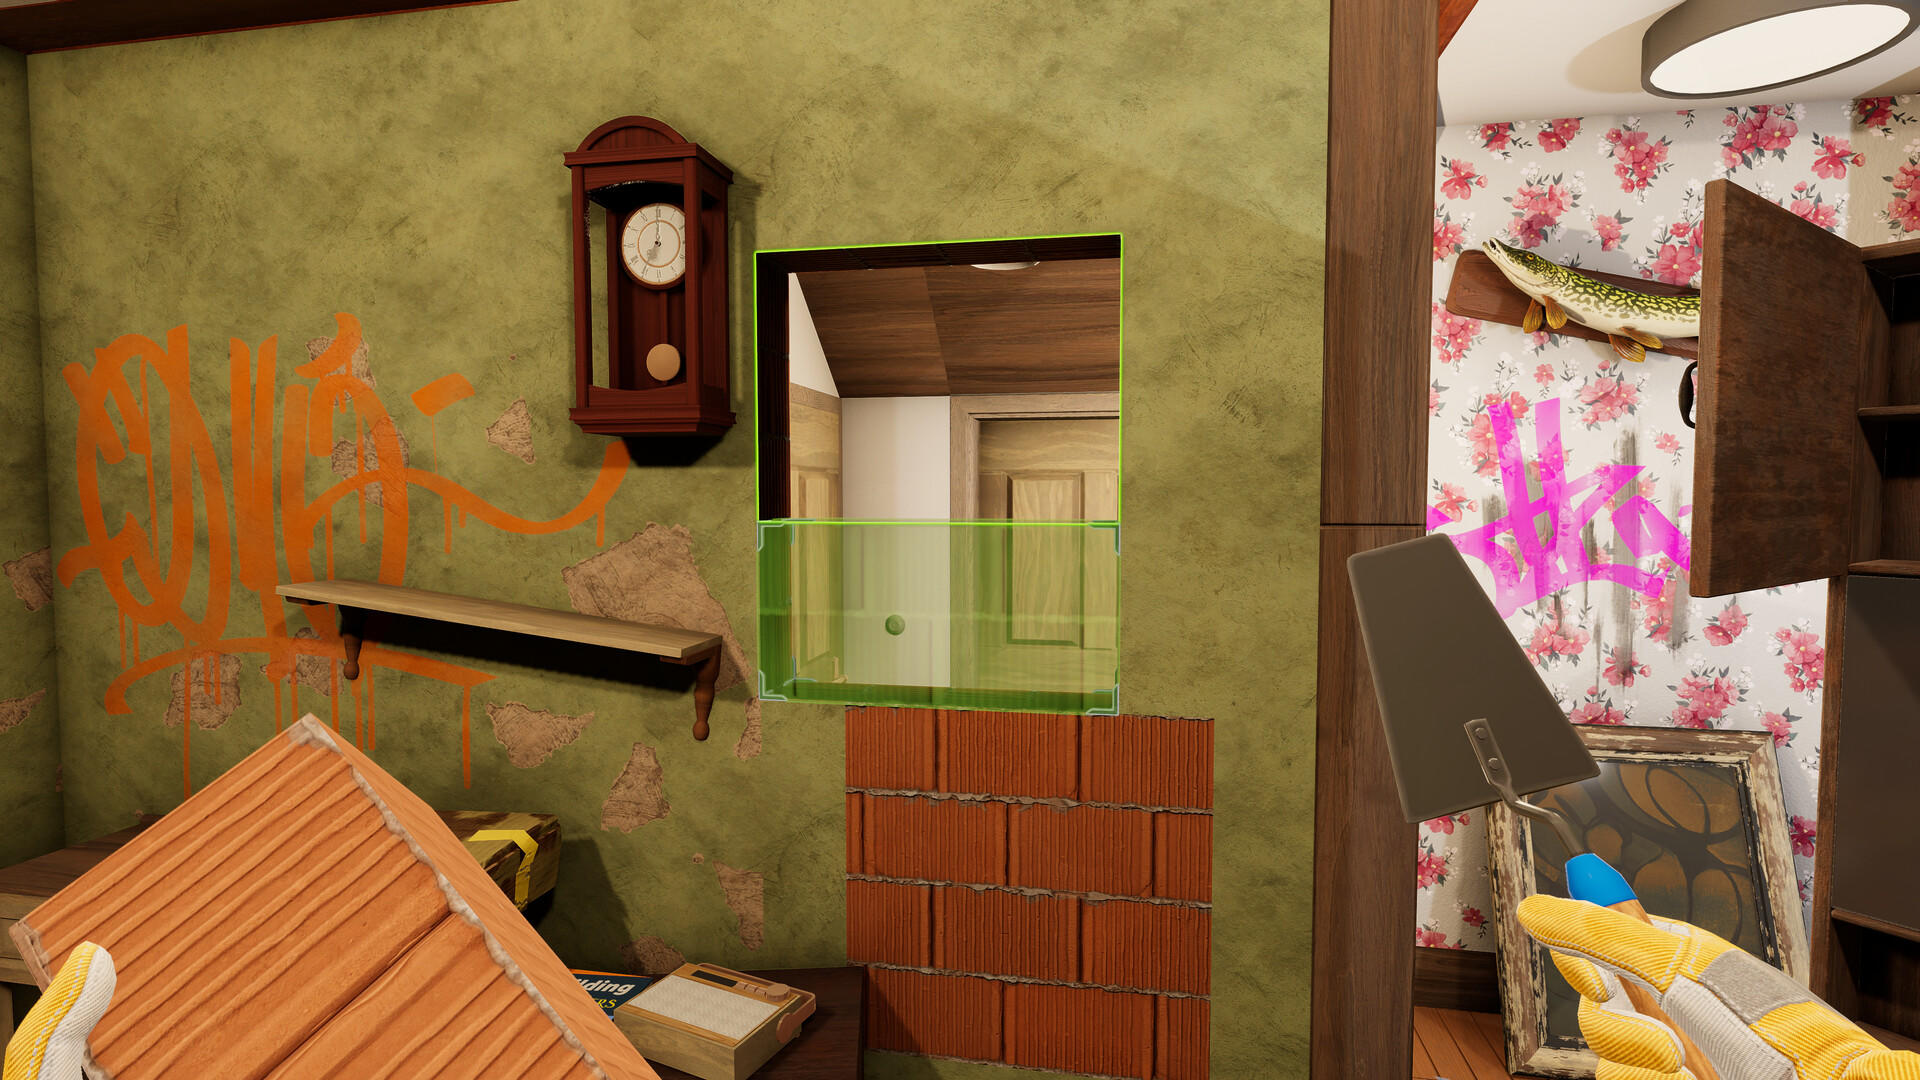 House Flipper 2 screenshot game